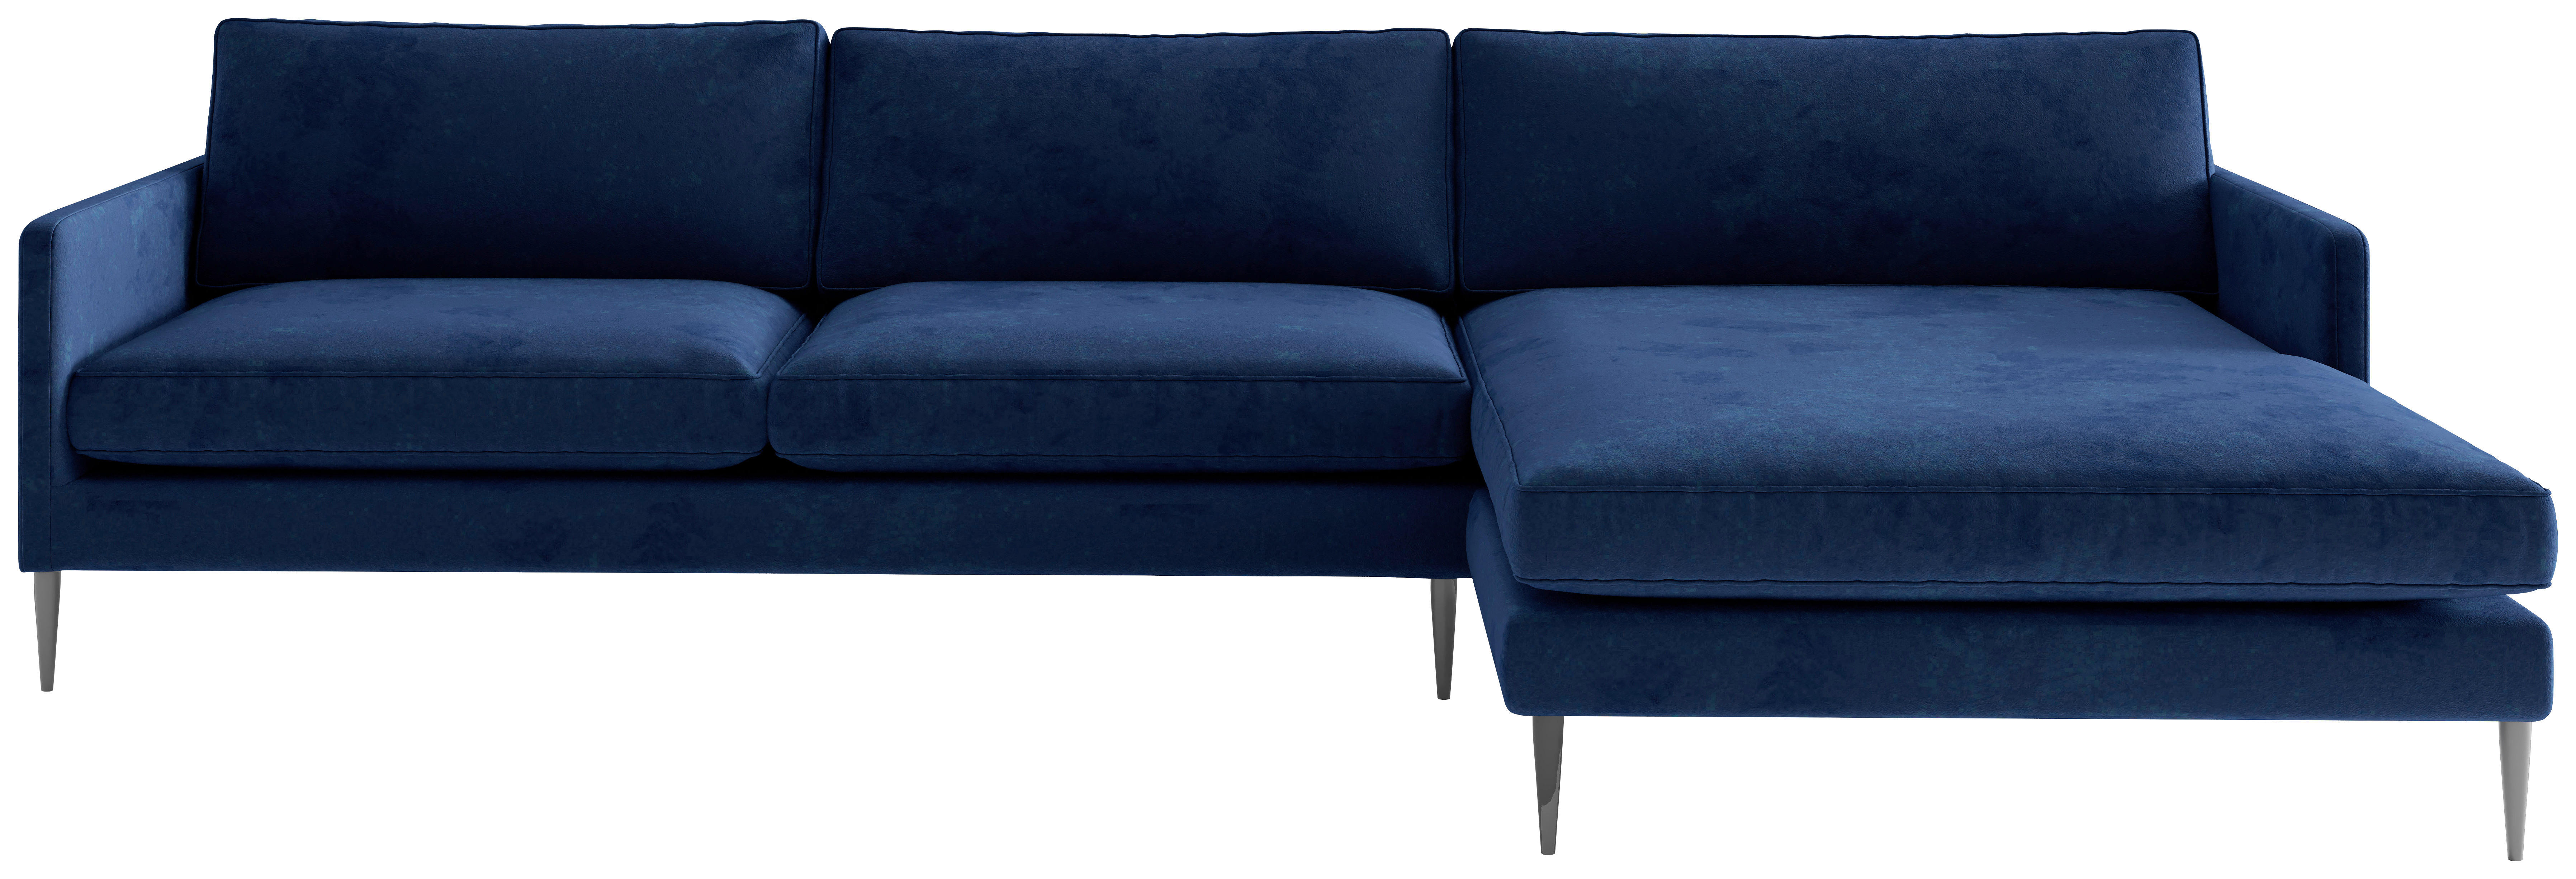 ECKSOFA Blau Samt, Velours  - Blau, Design, Textil/Metall (277/154/154cm) - Lomoco